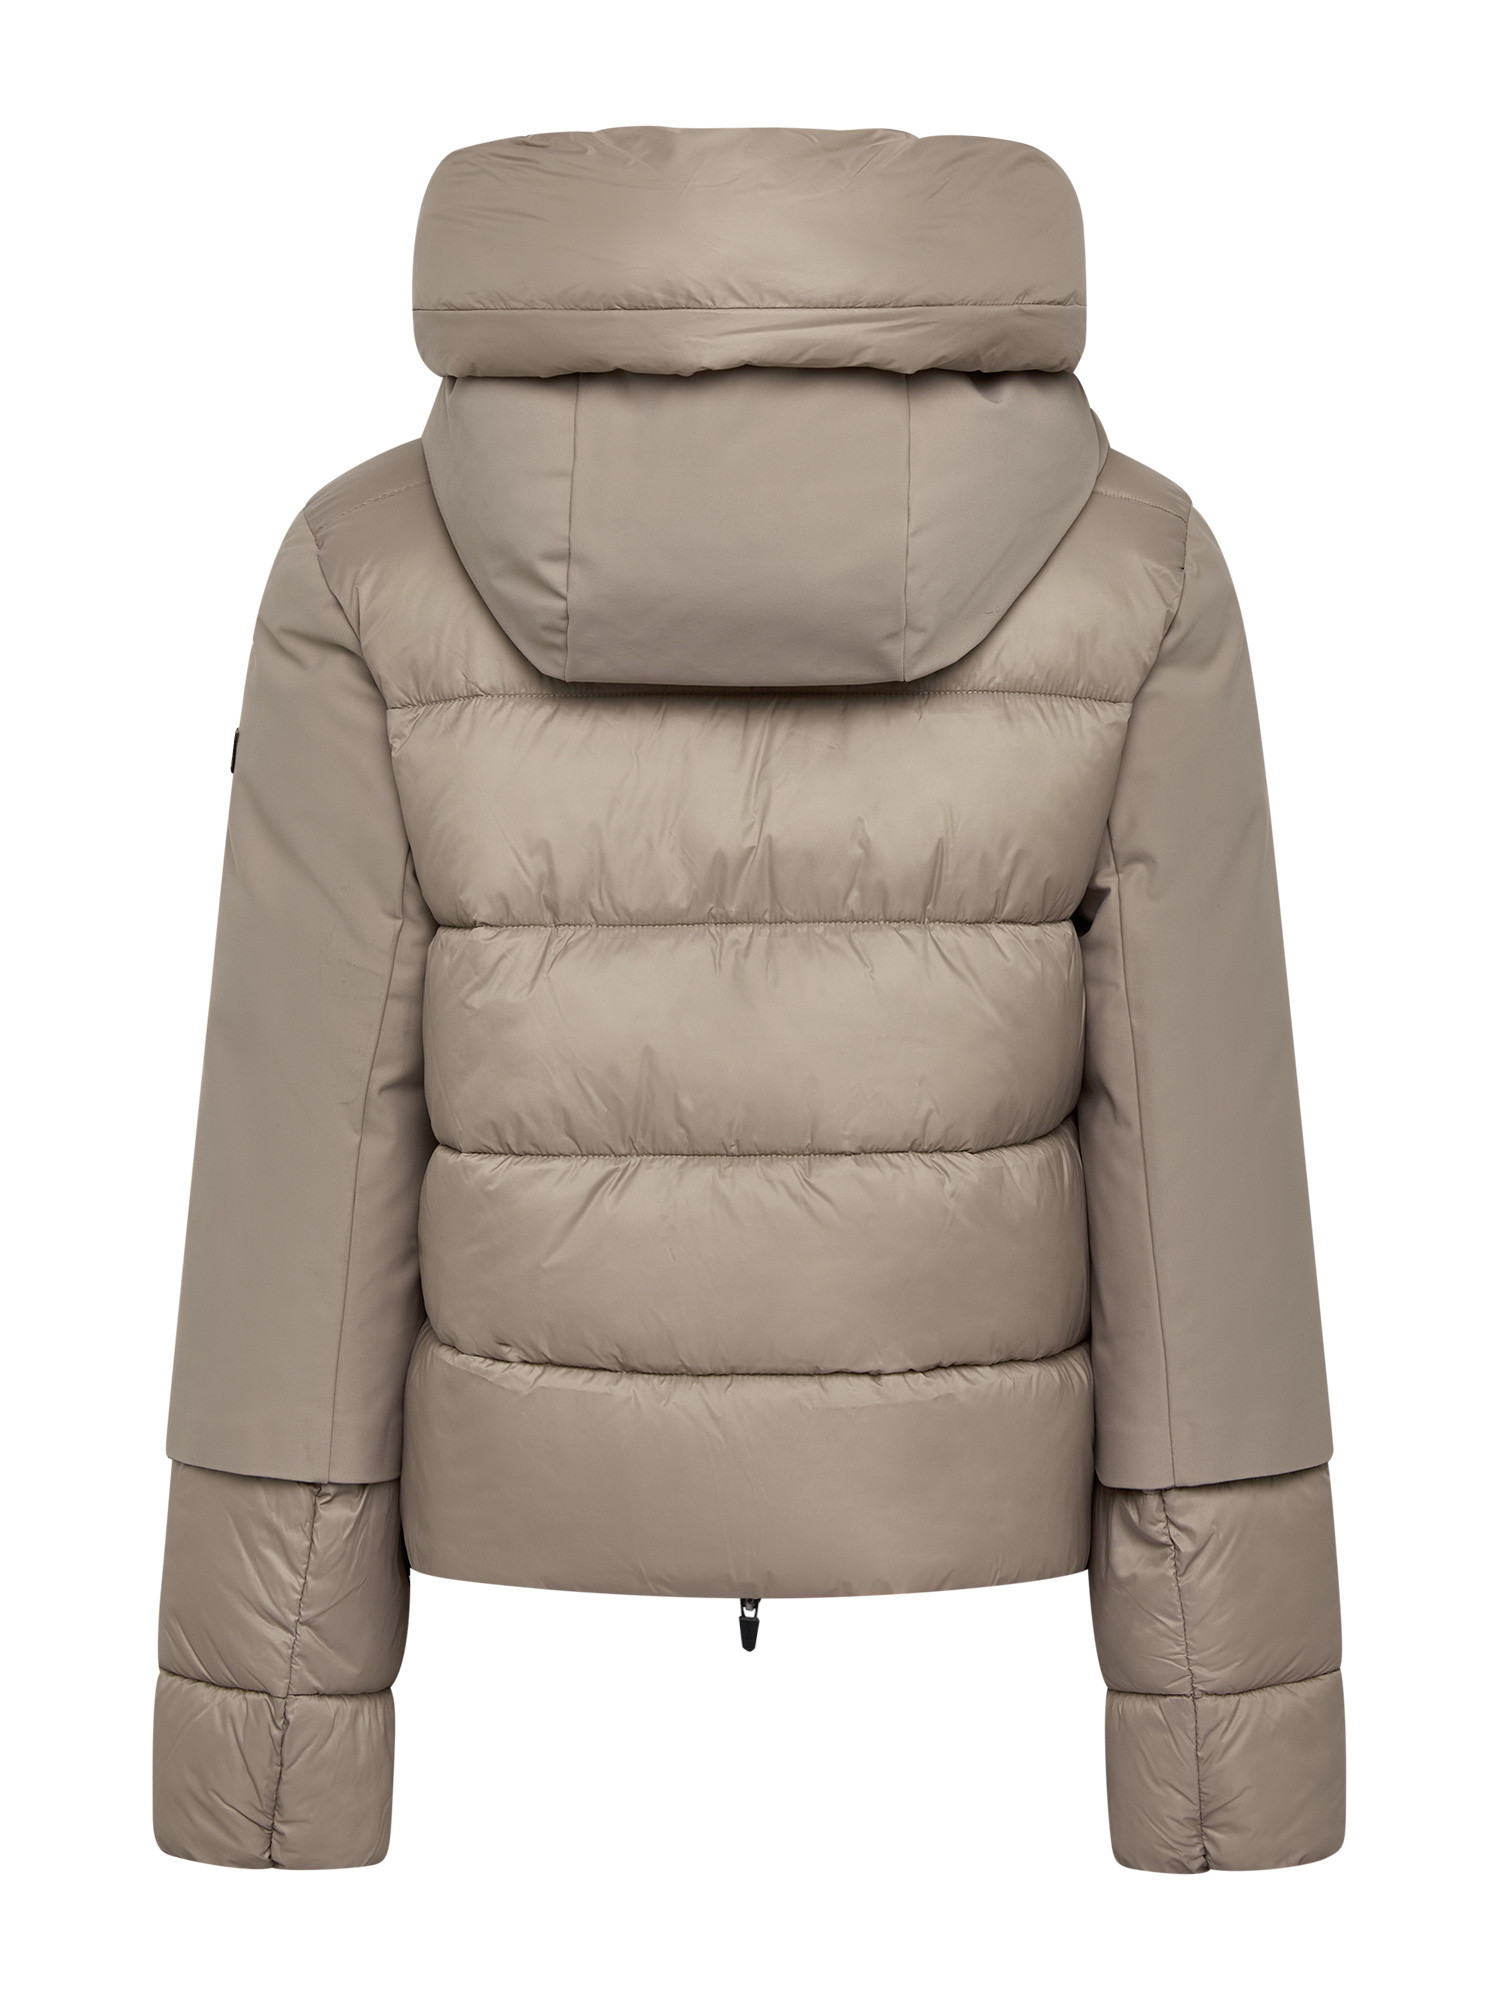 Canadian - Becancour short jacket, Grey, large image number 1